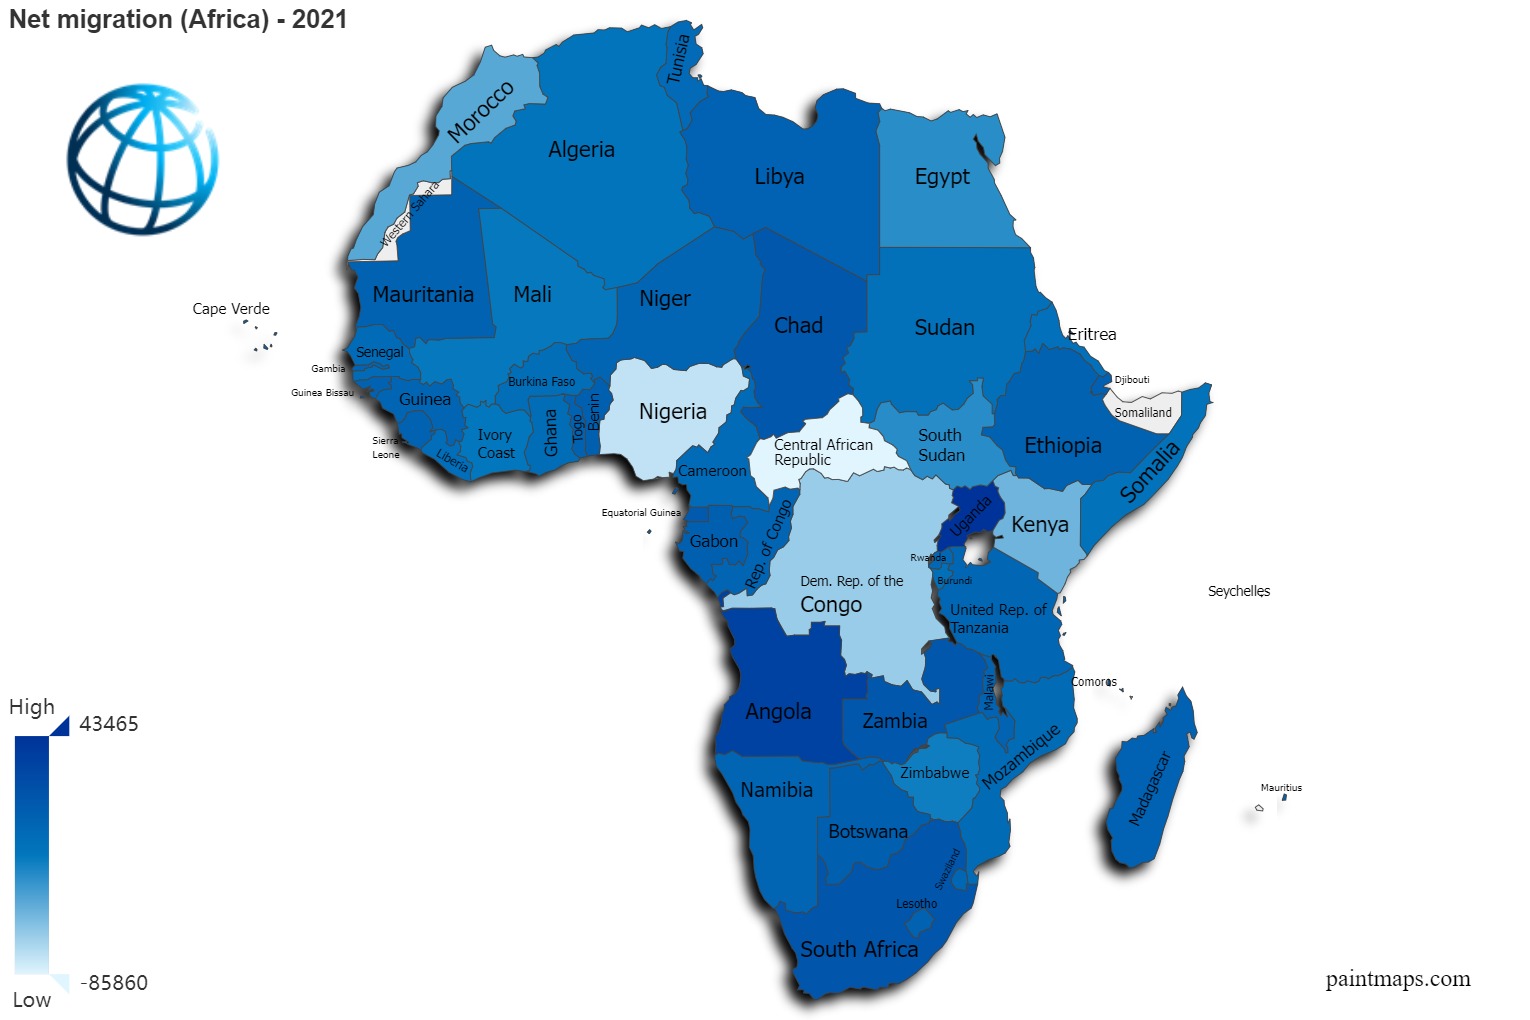 migracion-neta-en-africa-mapa